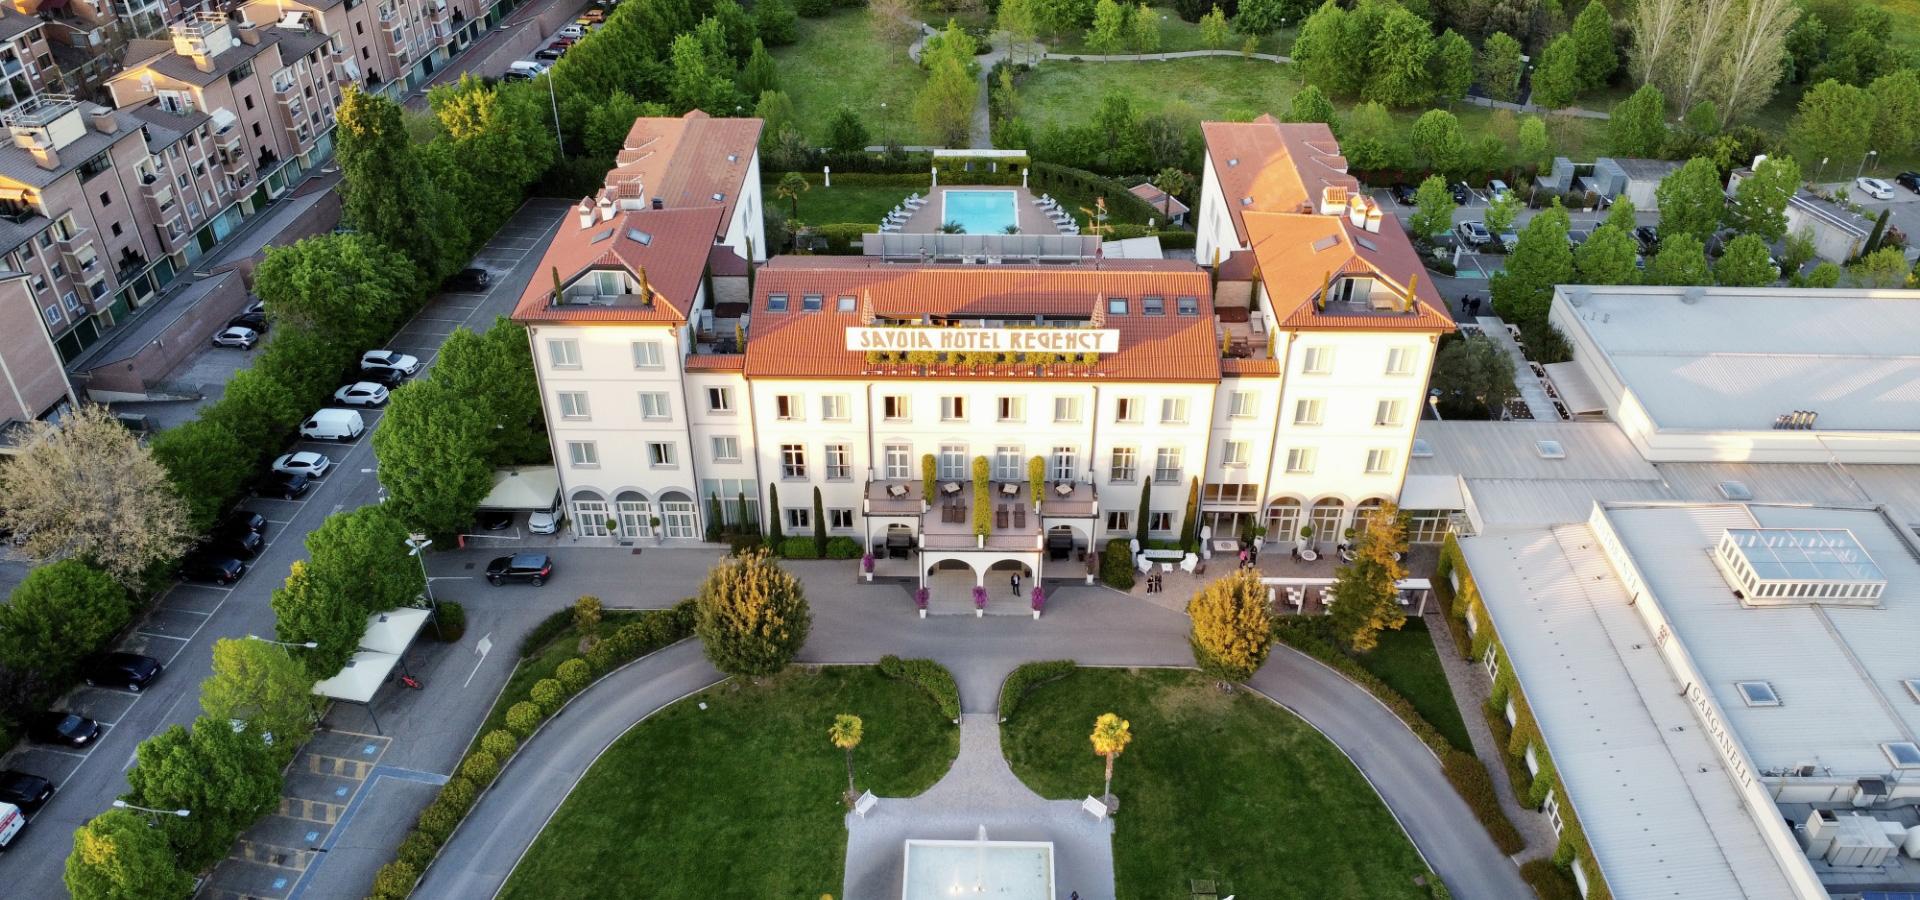 Vista aerea del Savoia Hotel Regency con piscina e giardino.